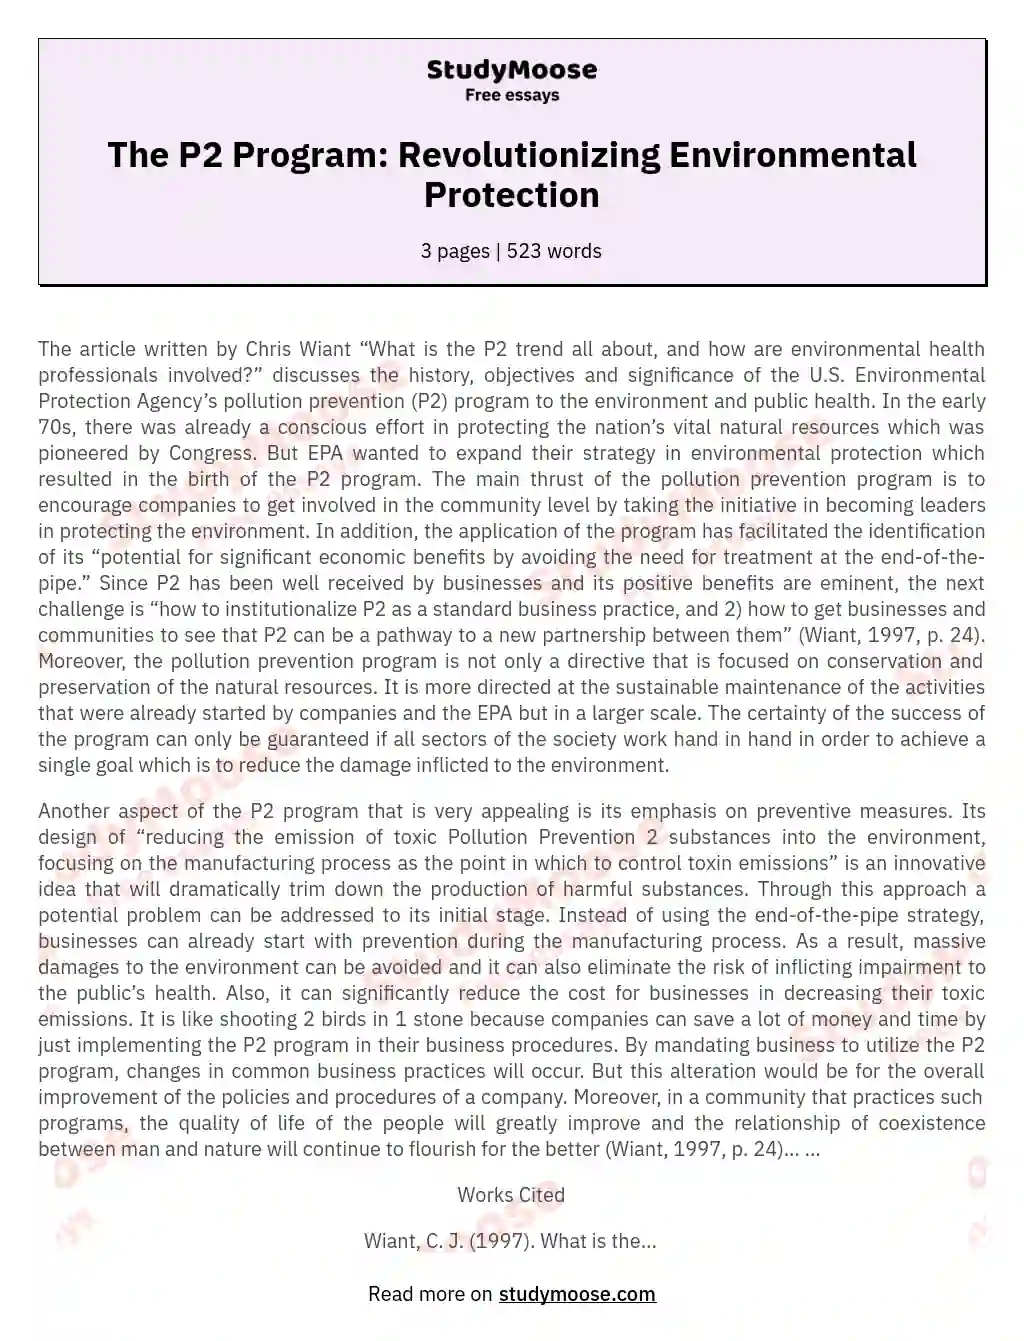 The P2 Program: Revolutionizing Environmental Protection essay